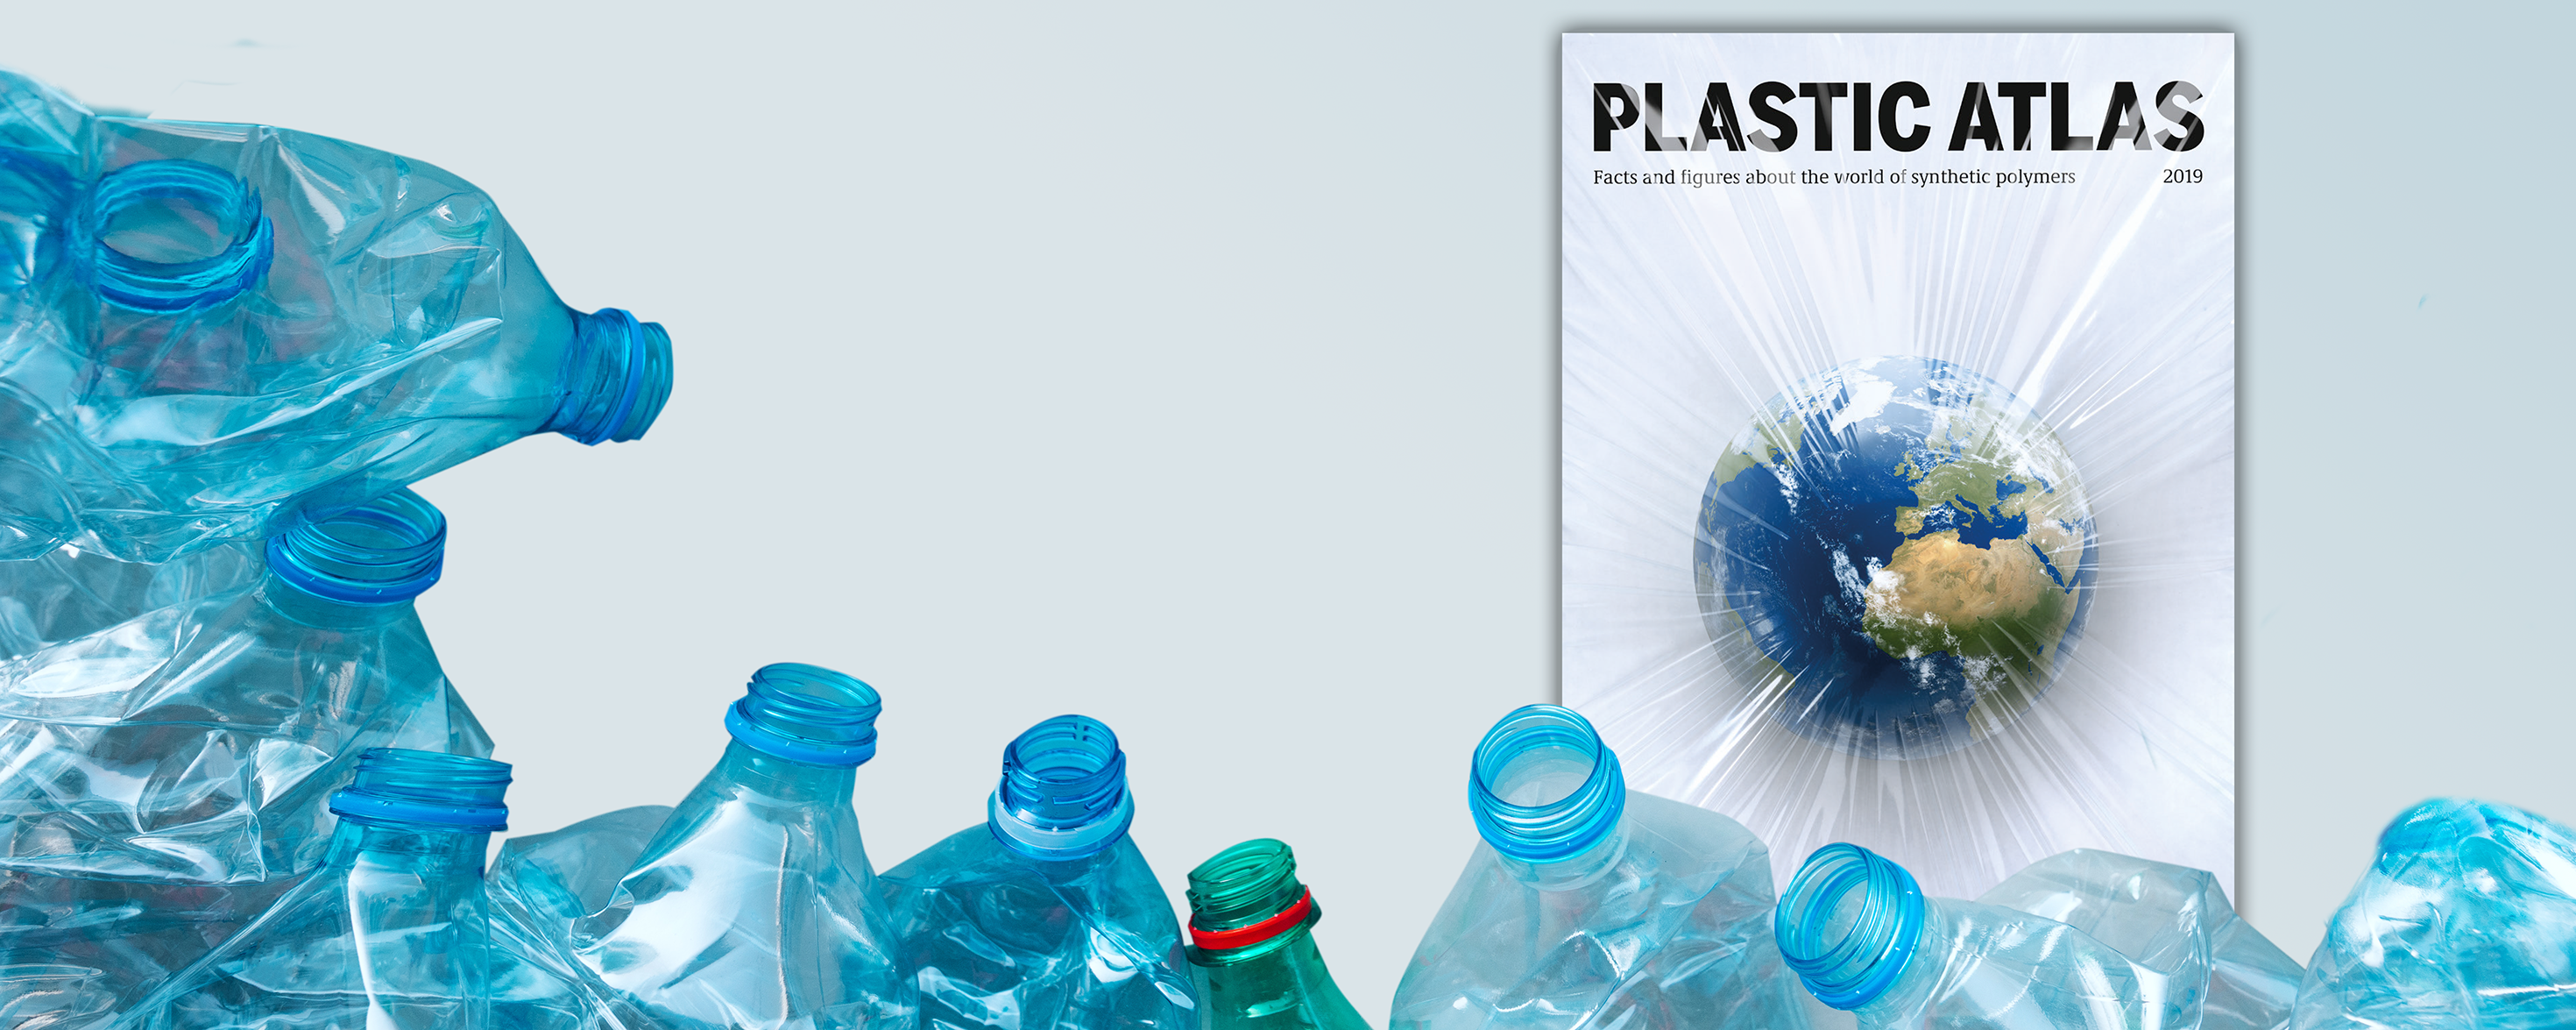 Why Ban Plastic?